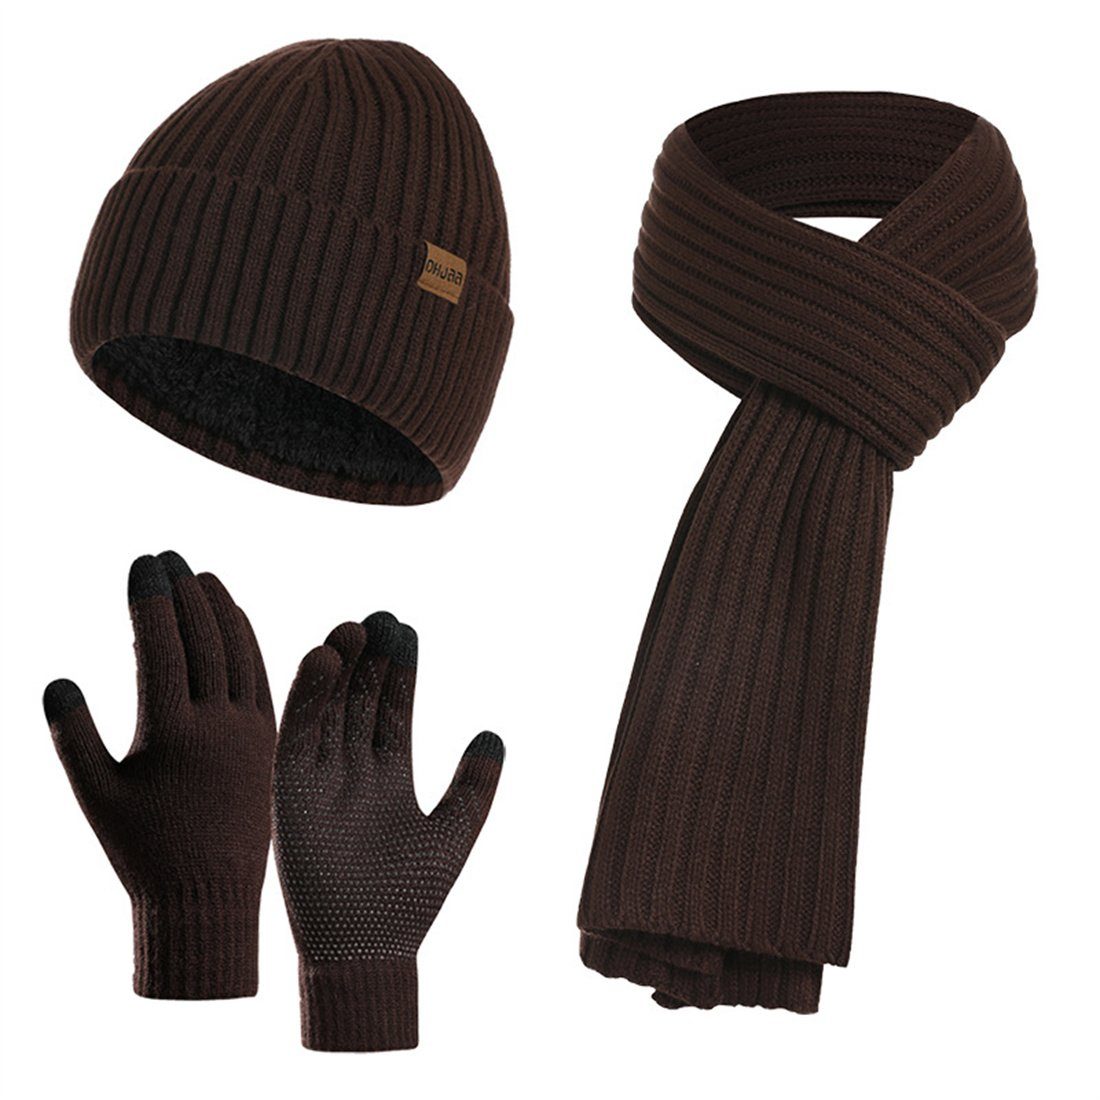 DÖRÖY Strickmütze Unisex Winter Strickmütze, Solid Farbe Hut Schal Handschuhe 3er Set Kaffee